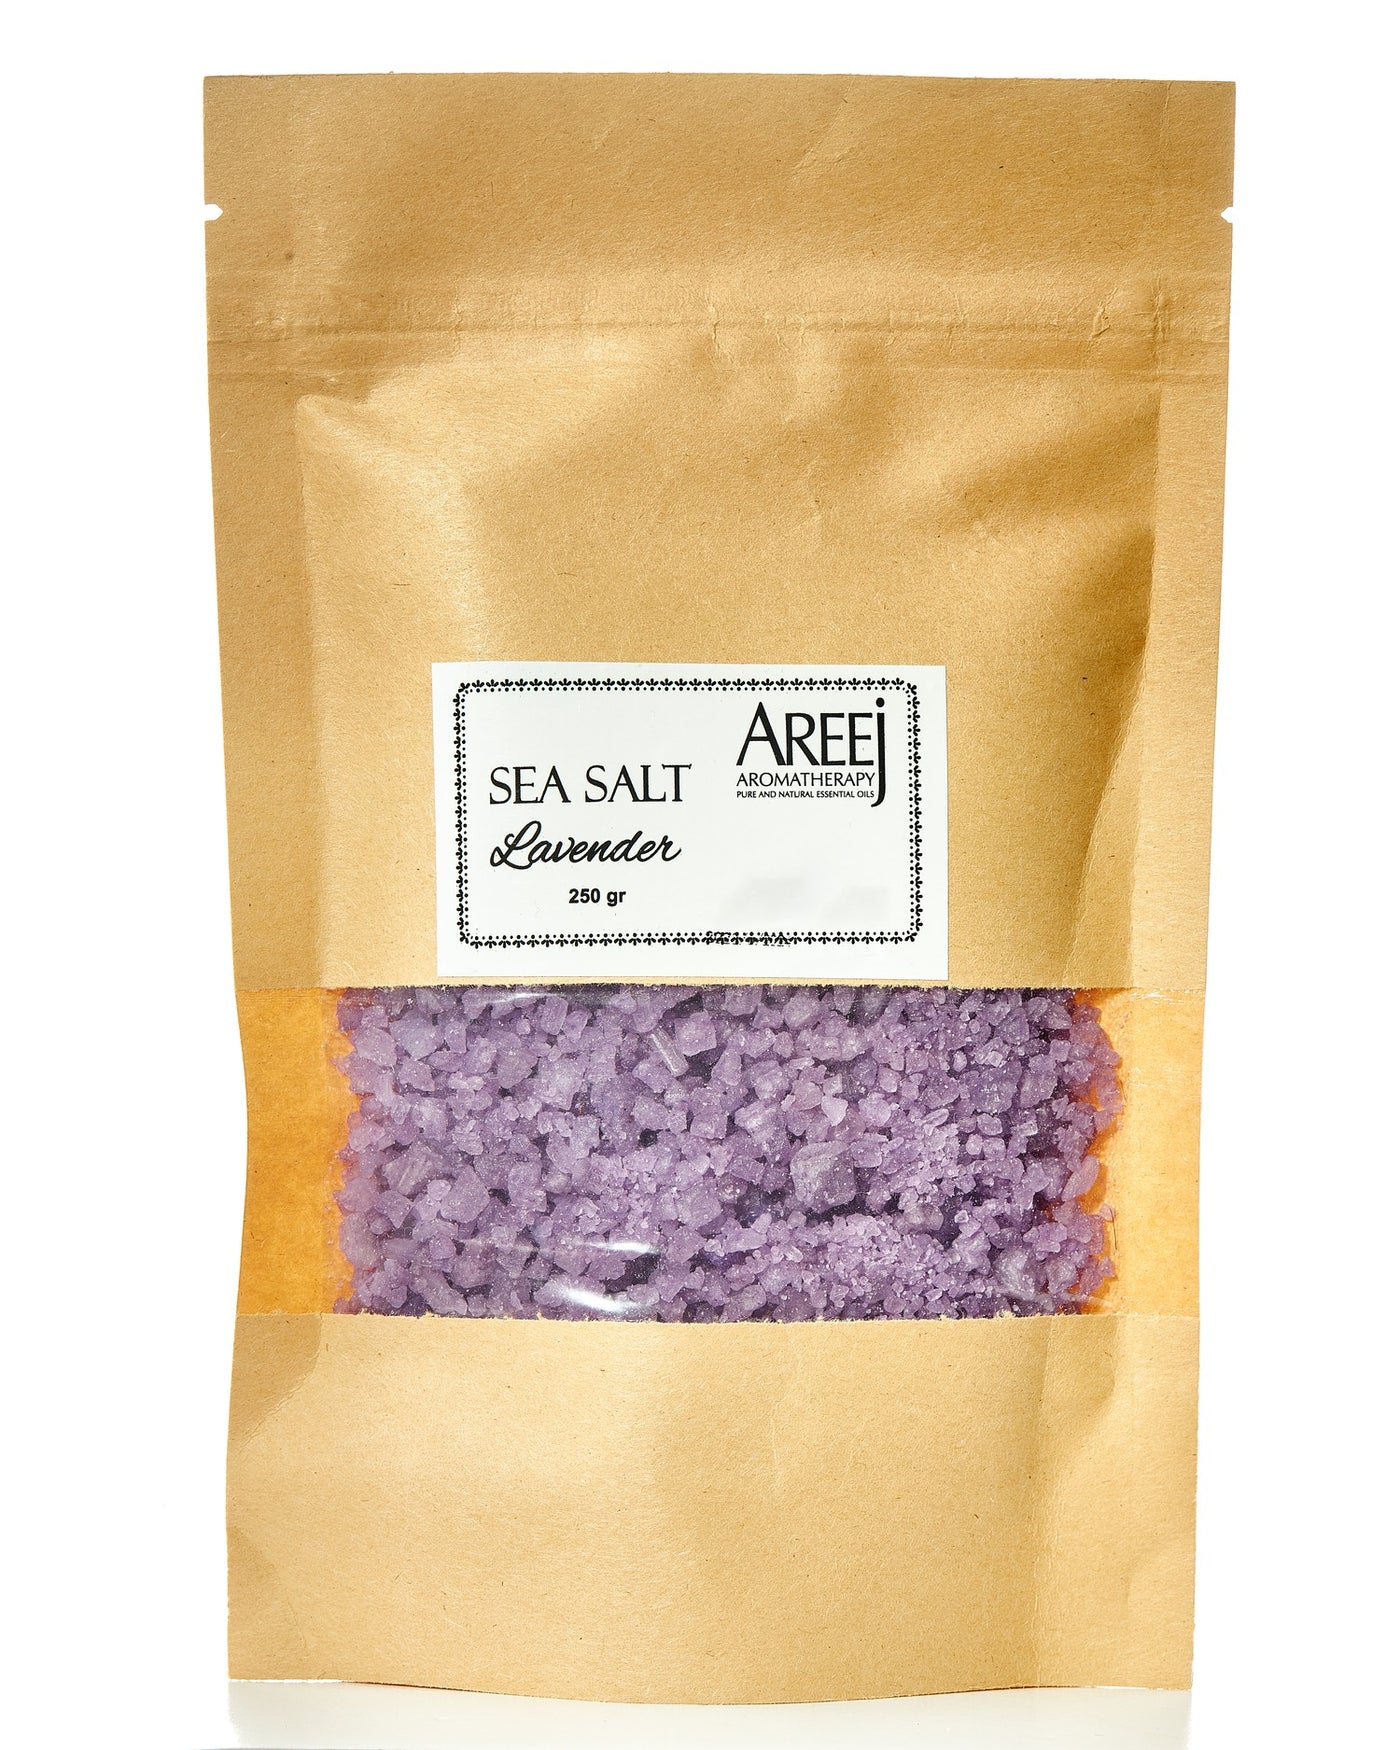 Lavender. Sea Salt 250 gm